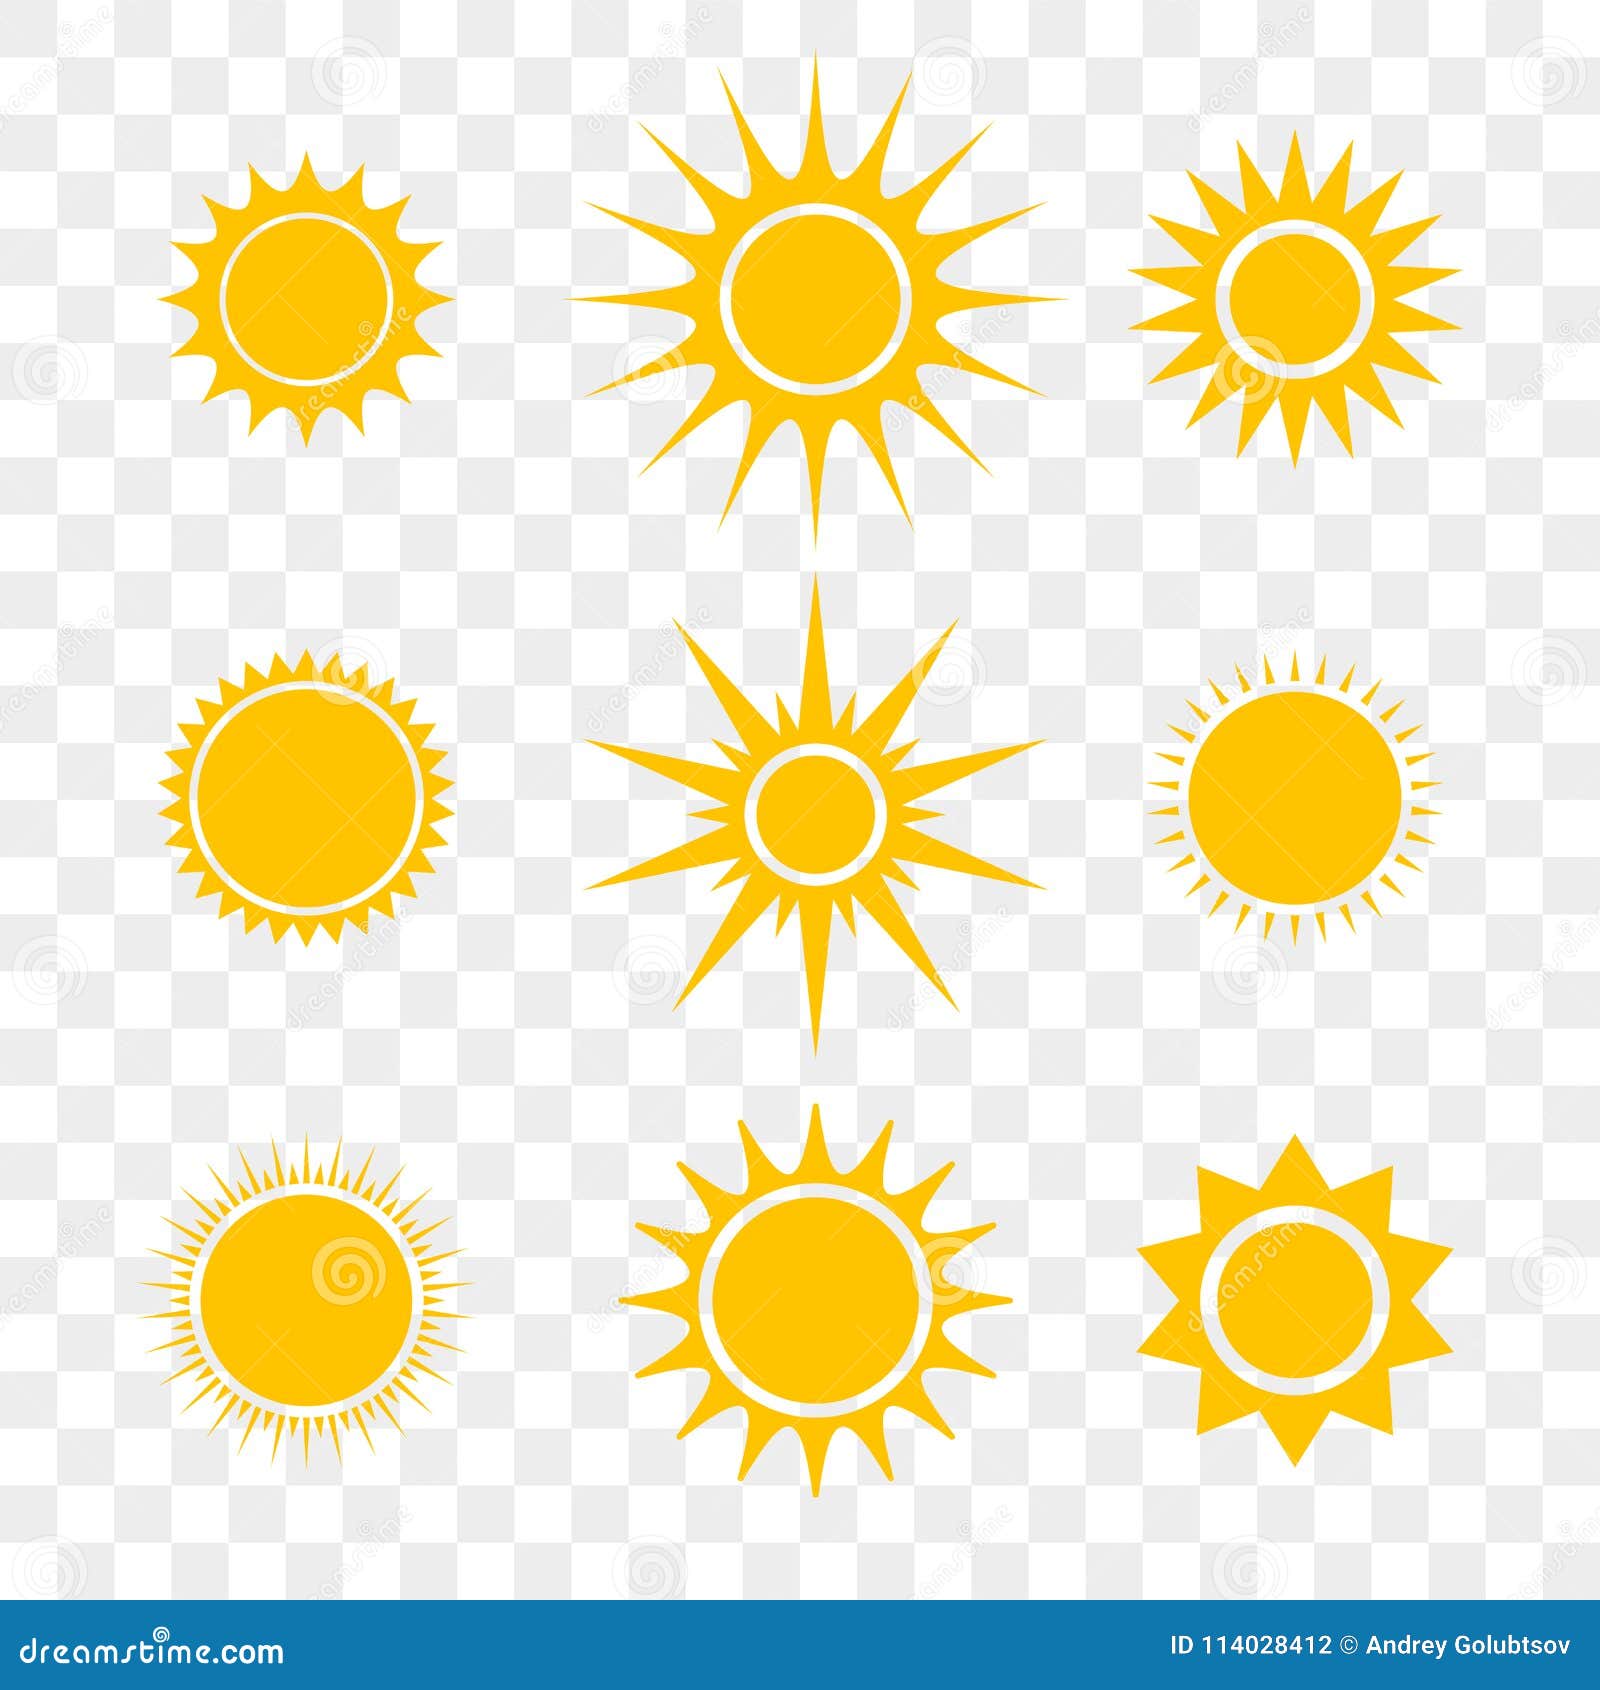 sun or star  cartoon yellow flat icons set